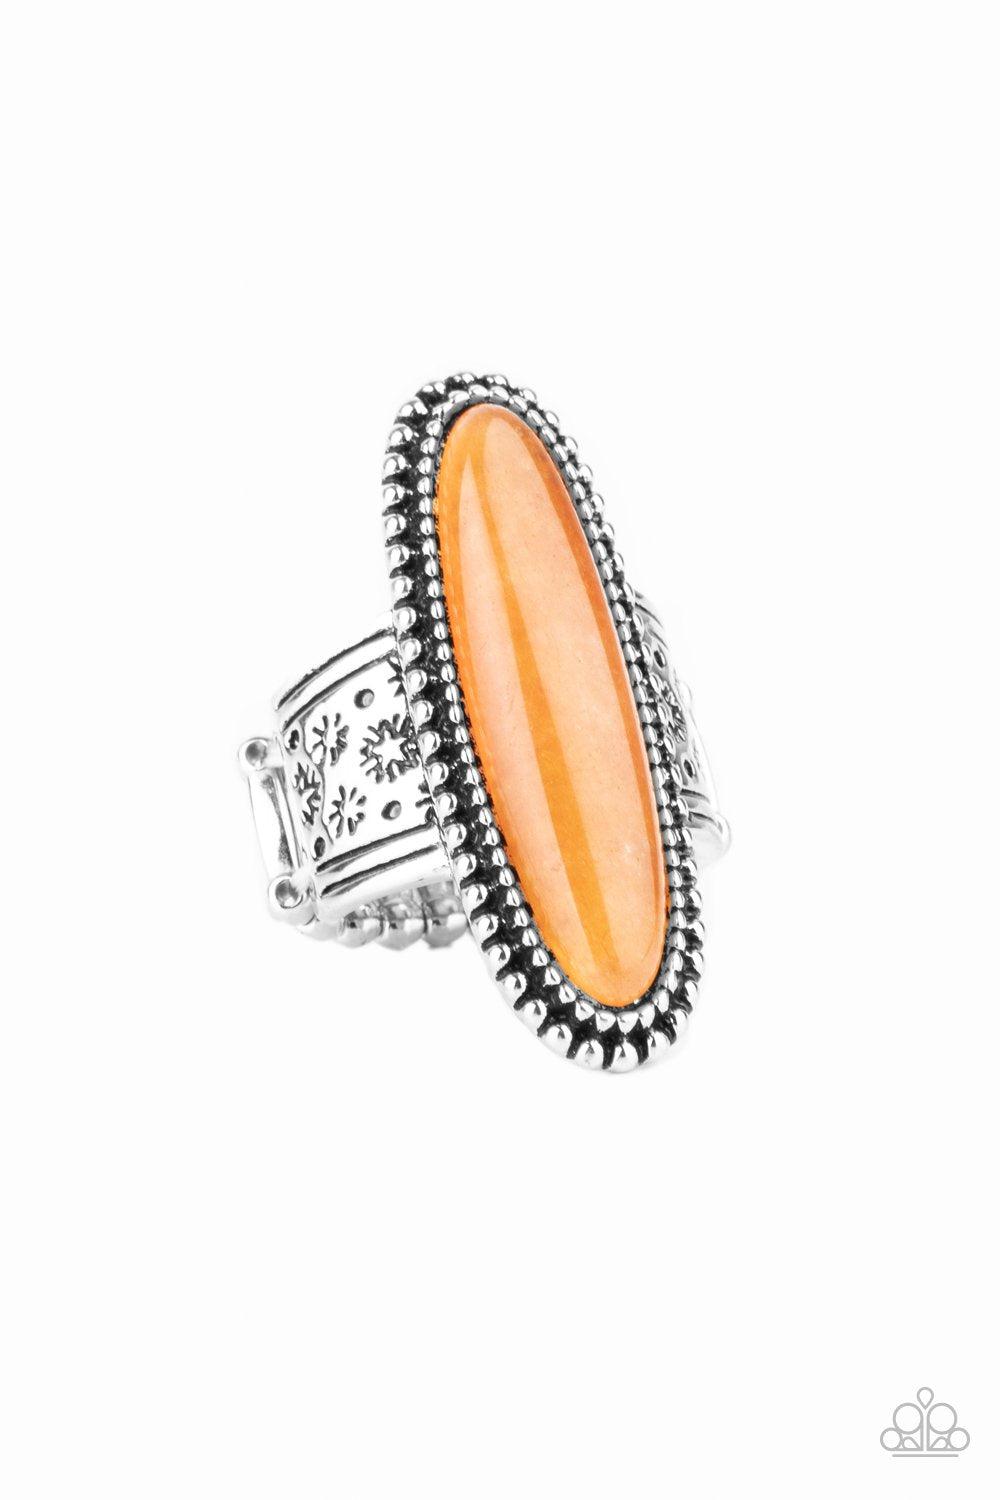 Ultra Luminary Orange Stone Ring - Paparazzi Accessories- lightbox - CarasShop.com - $5 Jewelry by Cara Jewels